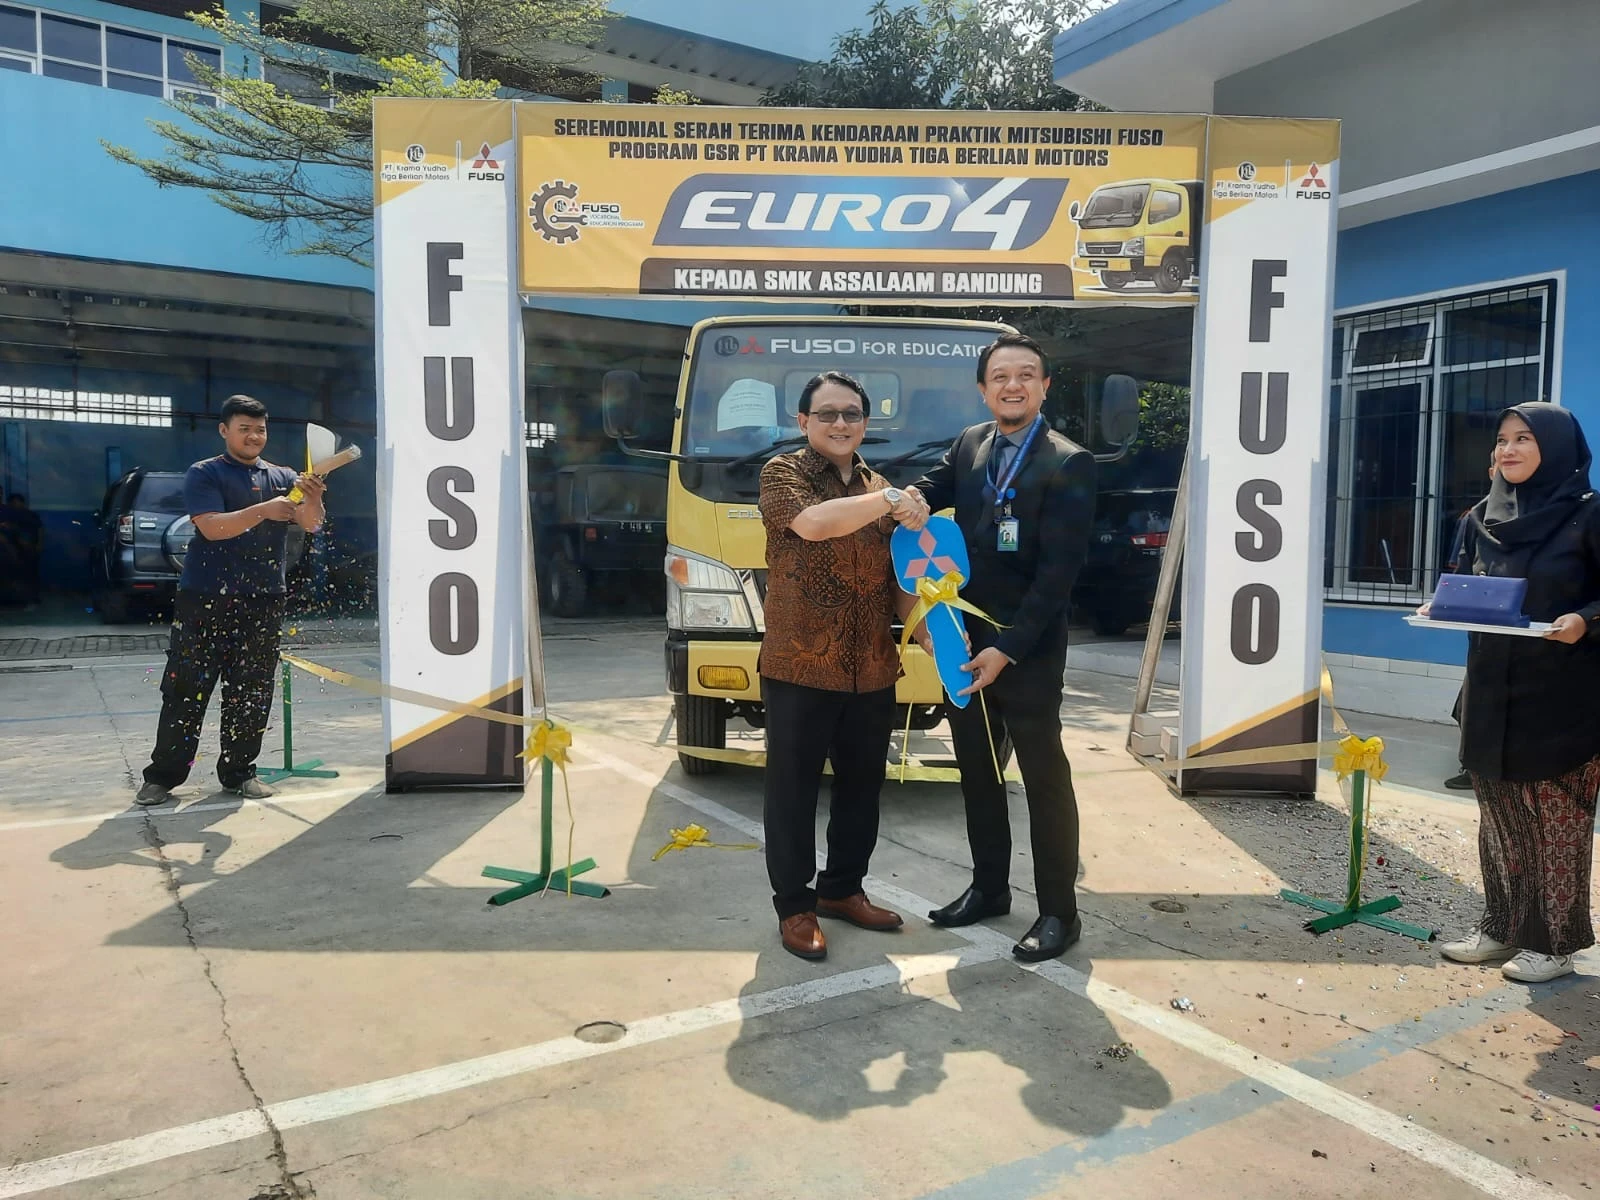 PT.KTB Donasikan Truk Mitsubishi Fuso Canter Euro 4 Untuk Menunjang Pendidikan Kejuruan kepada SMK Assalaam, Bandung